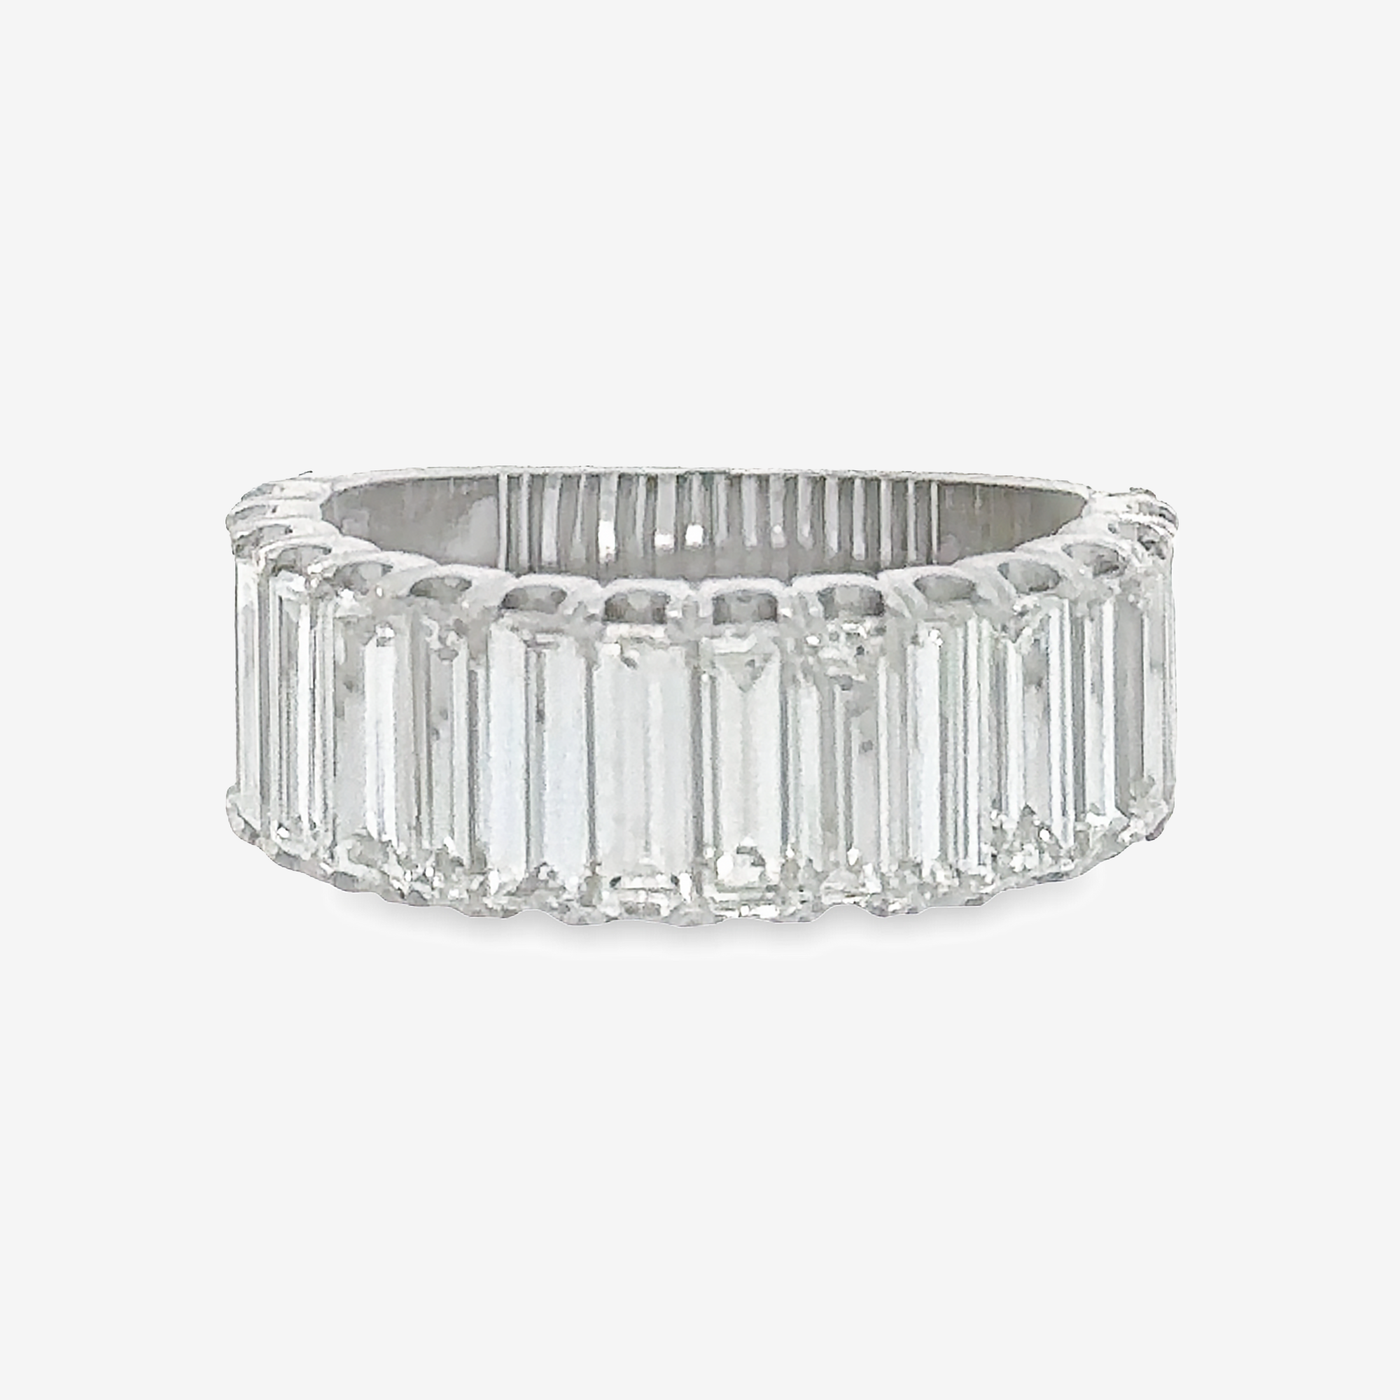 1/2 Way Wide Baguette Diamond Ring